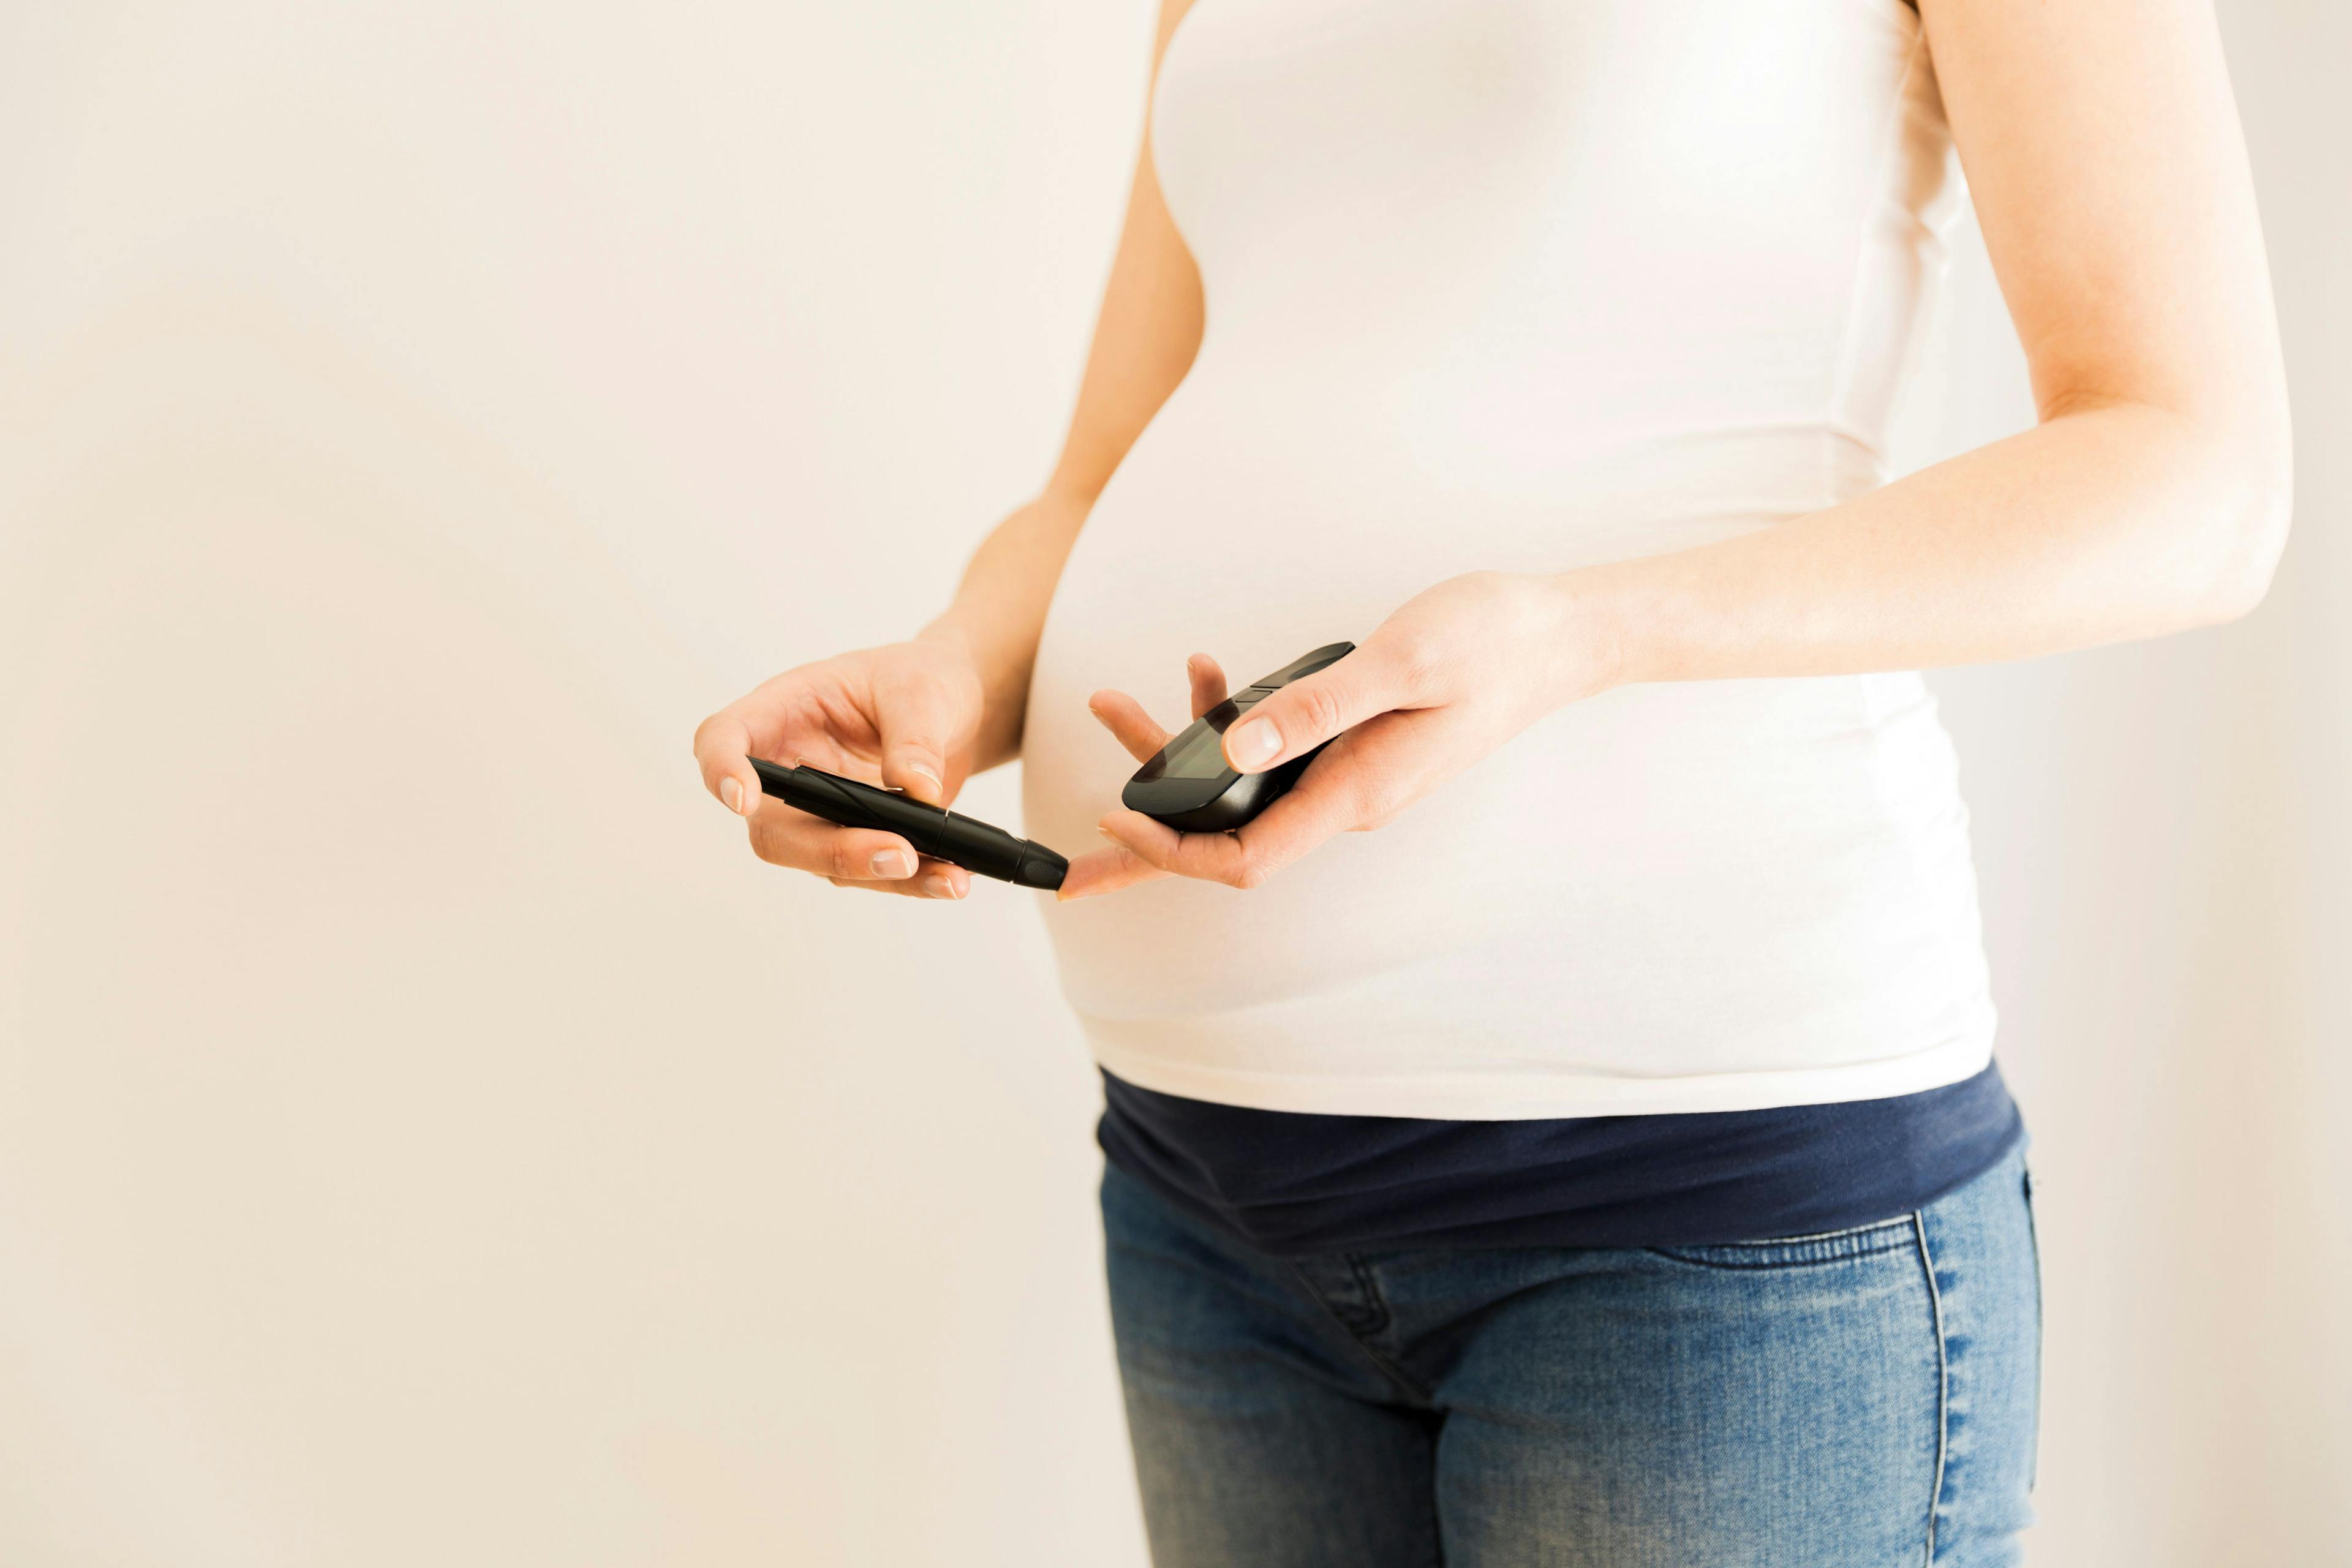 Pregnant woman checking blood sugar level. Gestational diabetes. Pregnancy health | Image credit: Artursfoto - stock.adobe.com